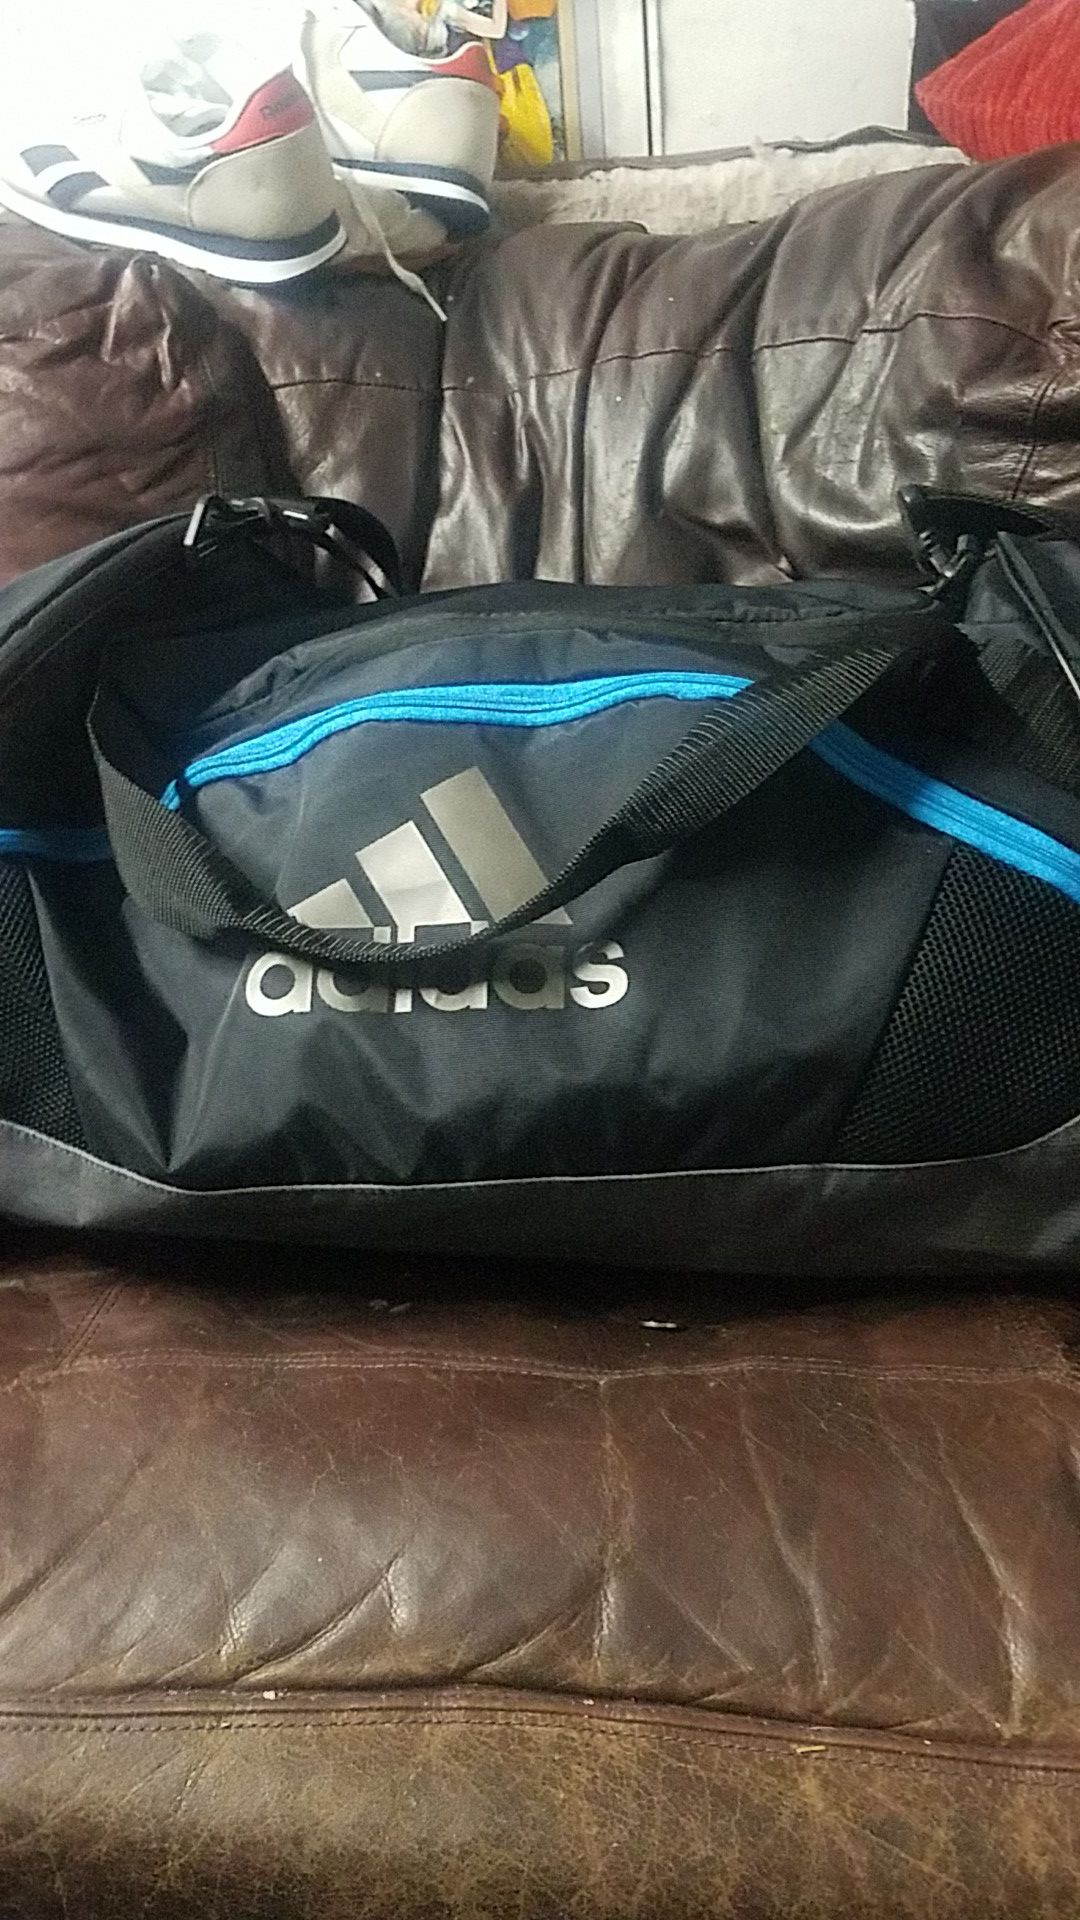 Adidas duffle bag